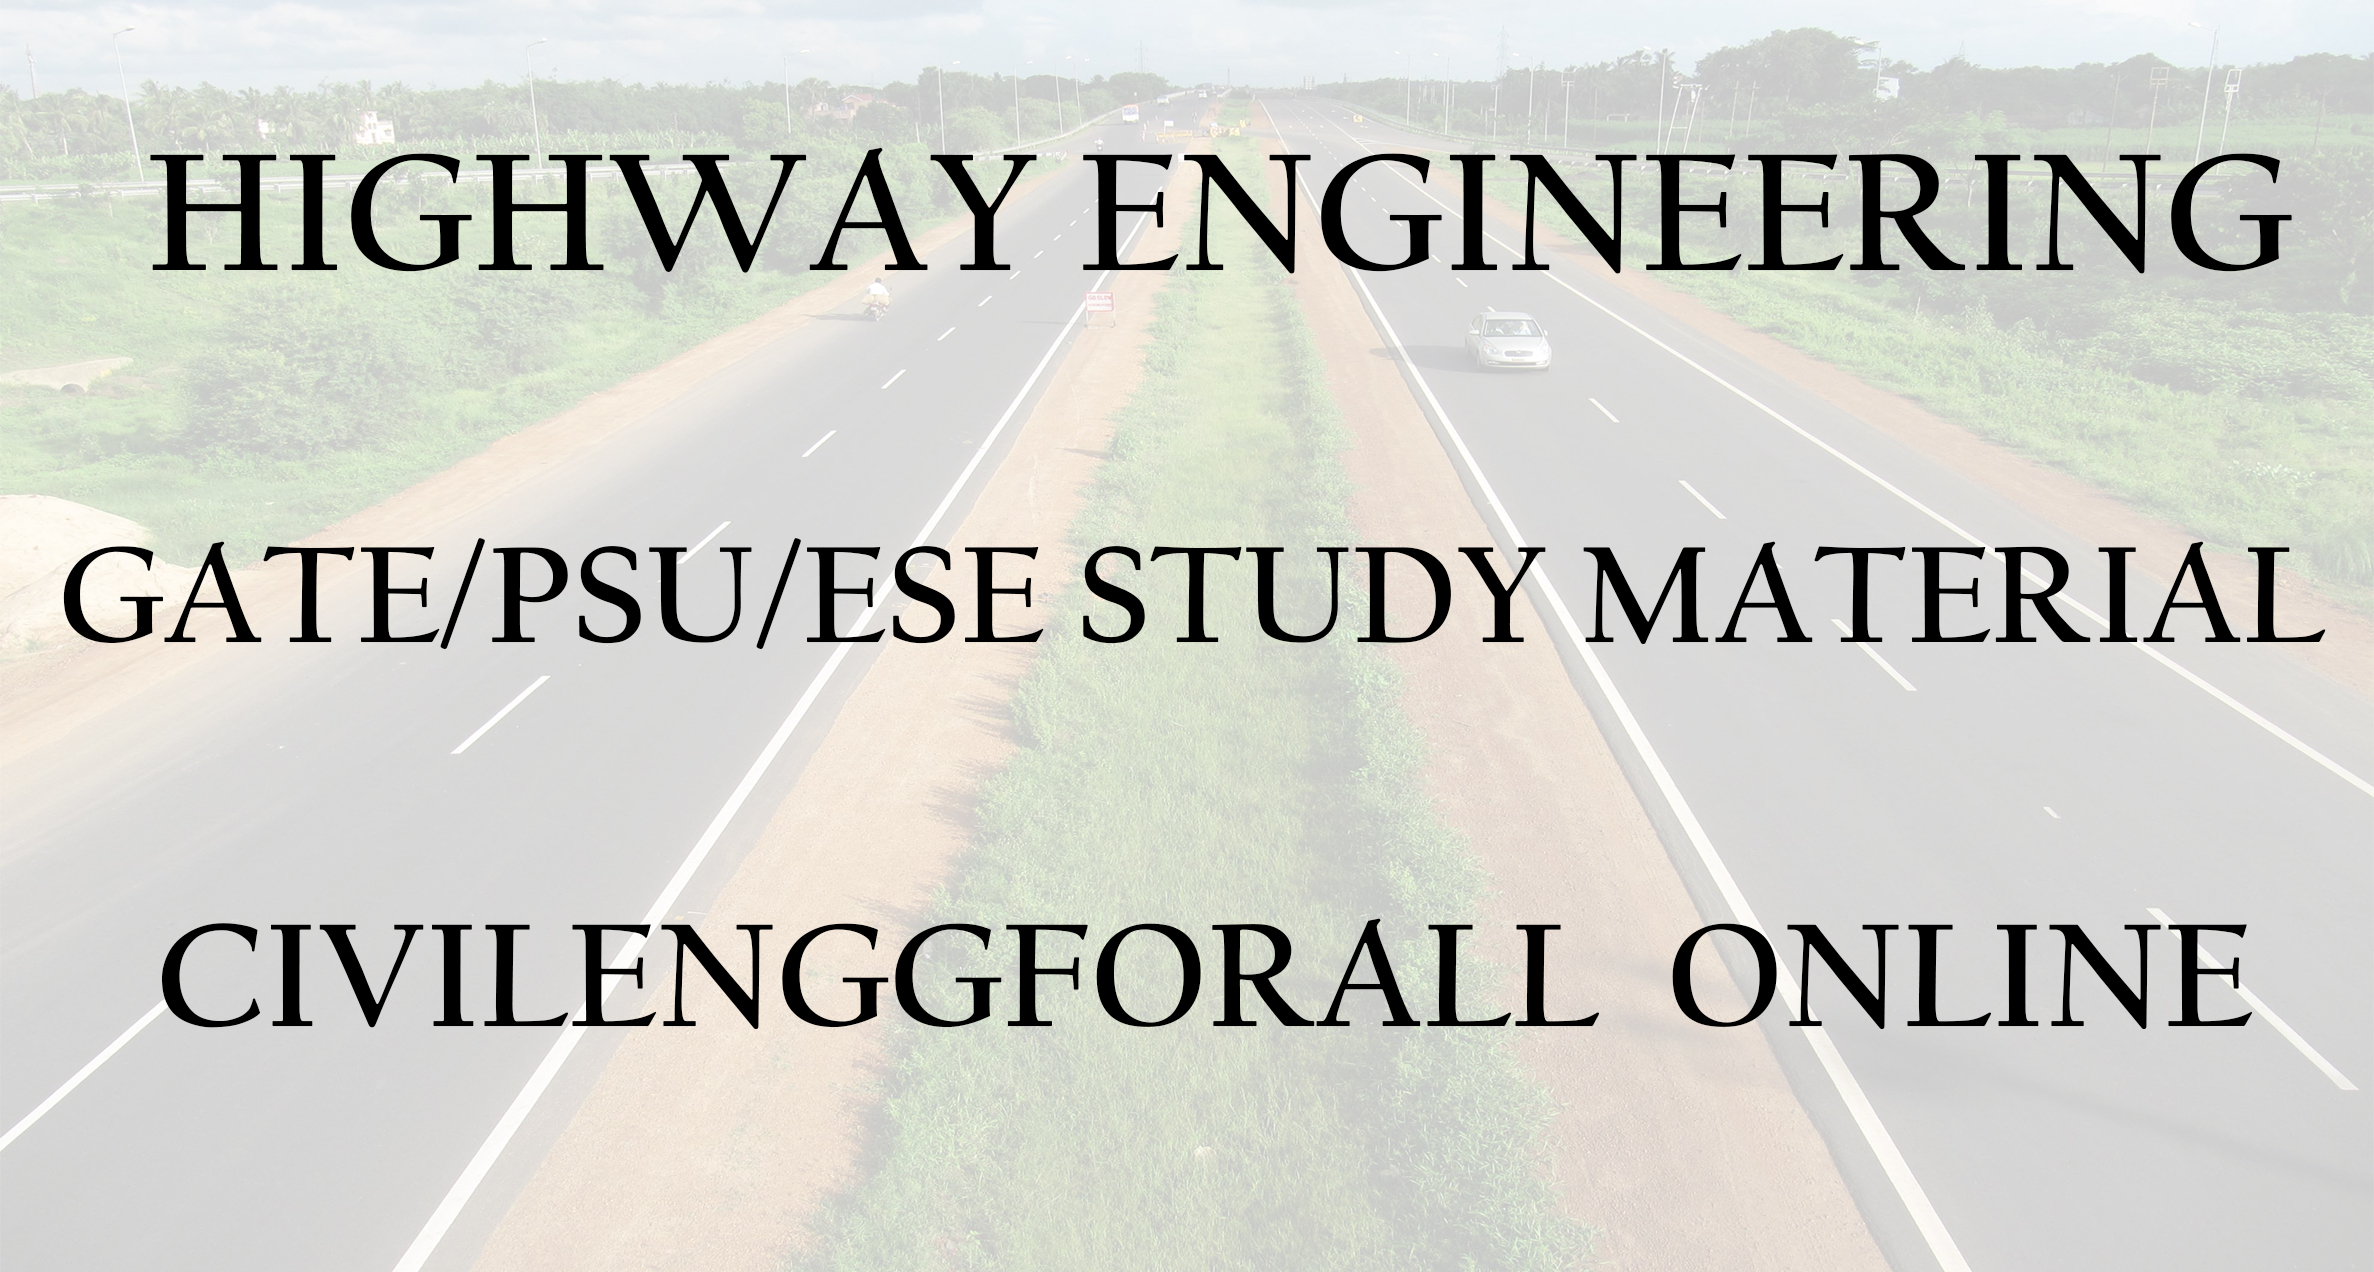 Highway Engineering GATE PSU ESE Online Study Material - CivilEnggForAll